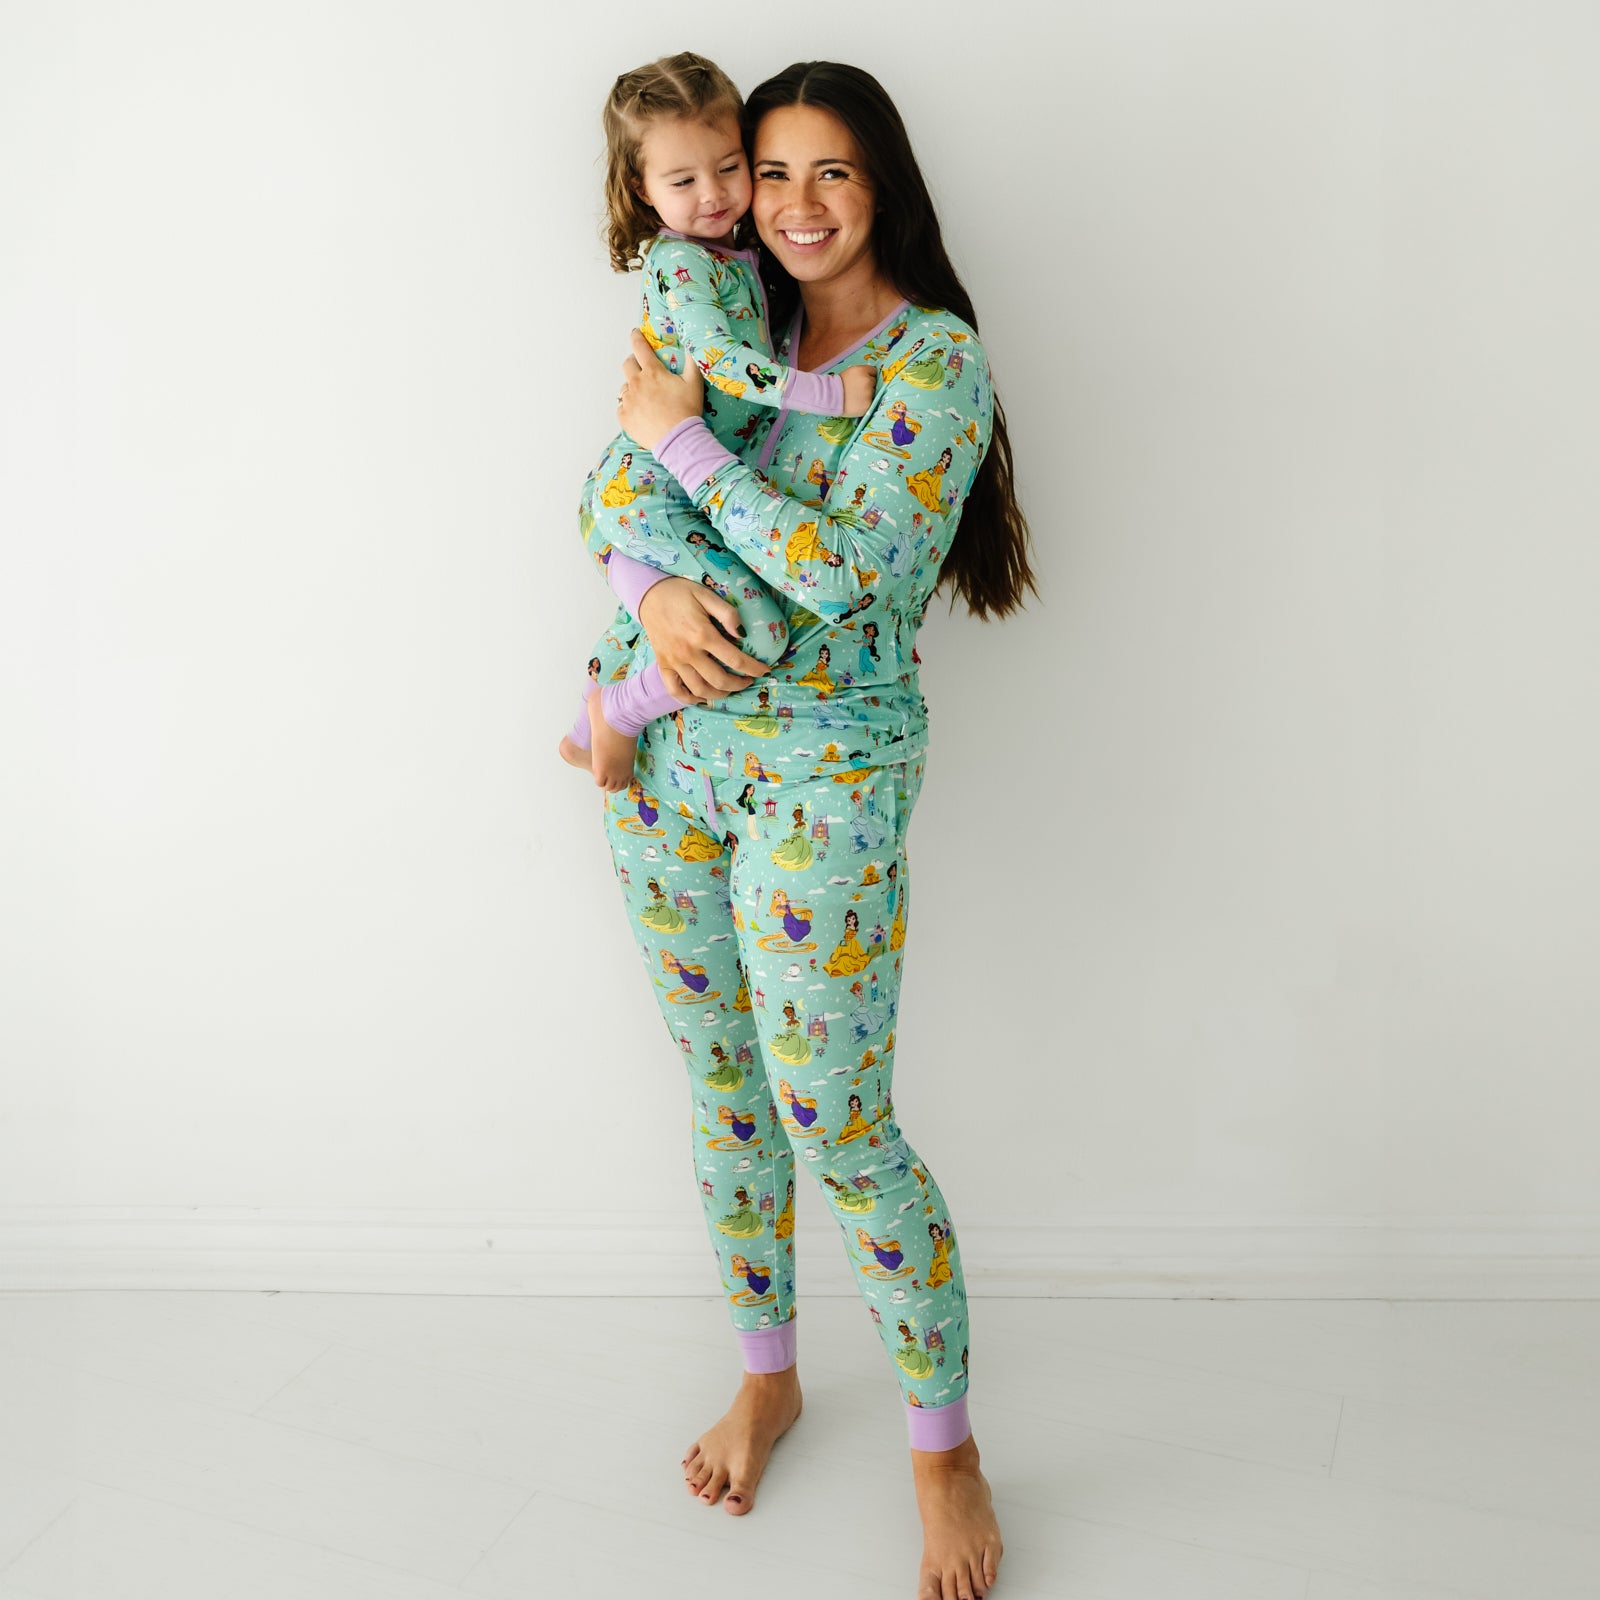 Mother and child wearing matching Disney Princess Dreams pajamas